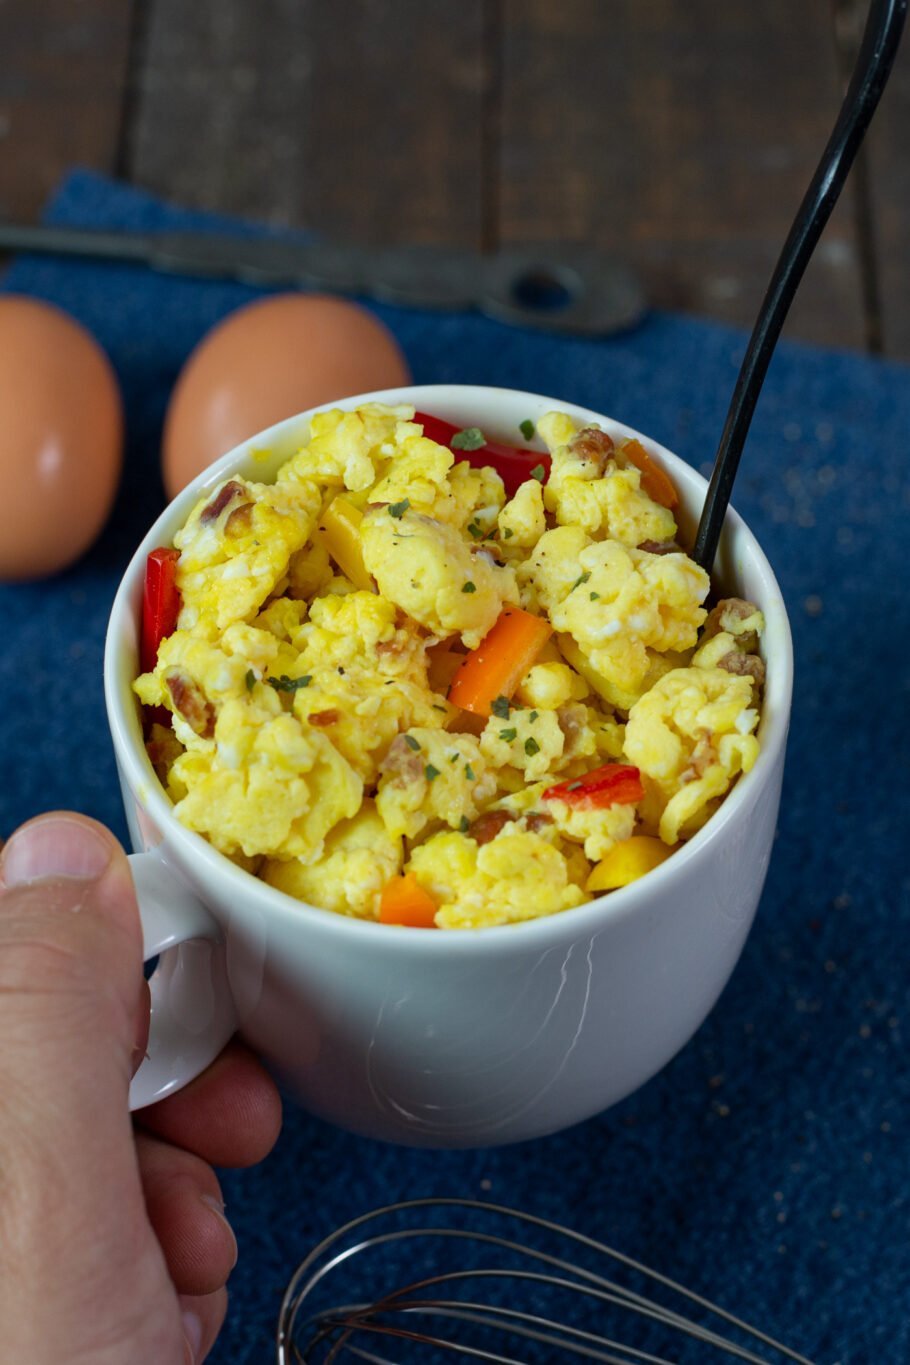 Microwave Scrambled Eggs in a Mug Recipe - The Protein Chef